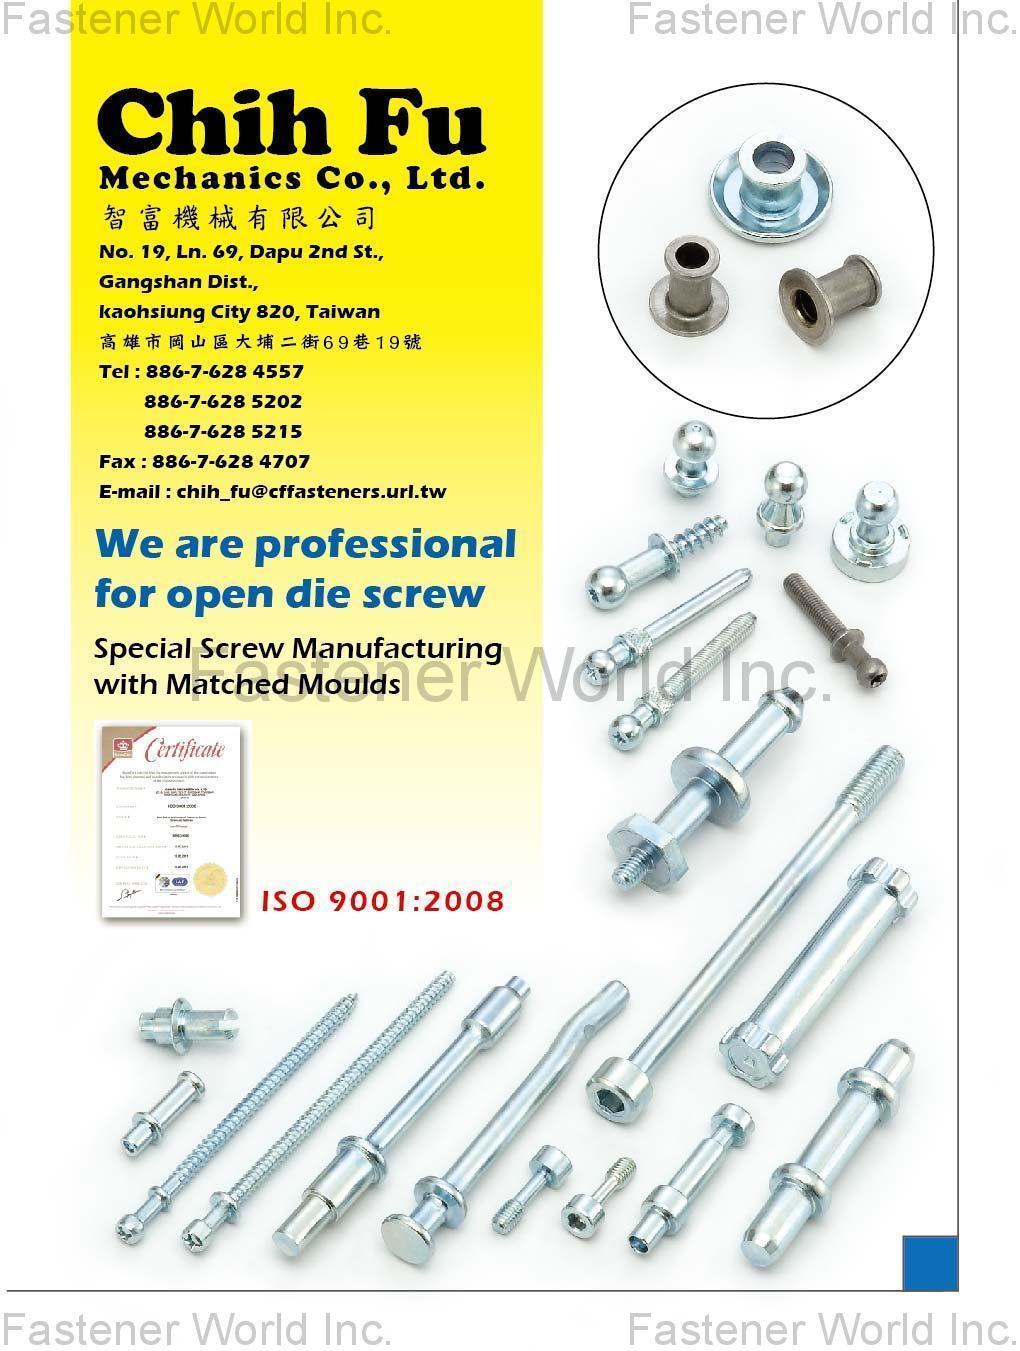 CHIH FU MECHANICS CO., LTD.  , AUTOMOTIVE PARTS, Ball stud, Pin stud, I-shaped Bushing, CONSTRUCTION PARTS, Machine screw, Tapping screw / Drywall screw, High Low thread screw, Tri-Lobular thread screw , Special Screws